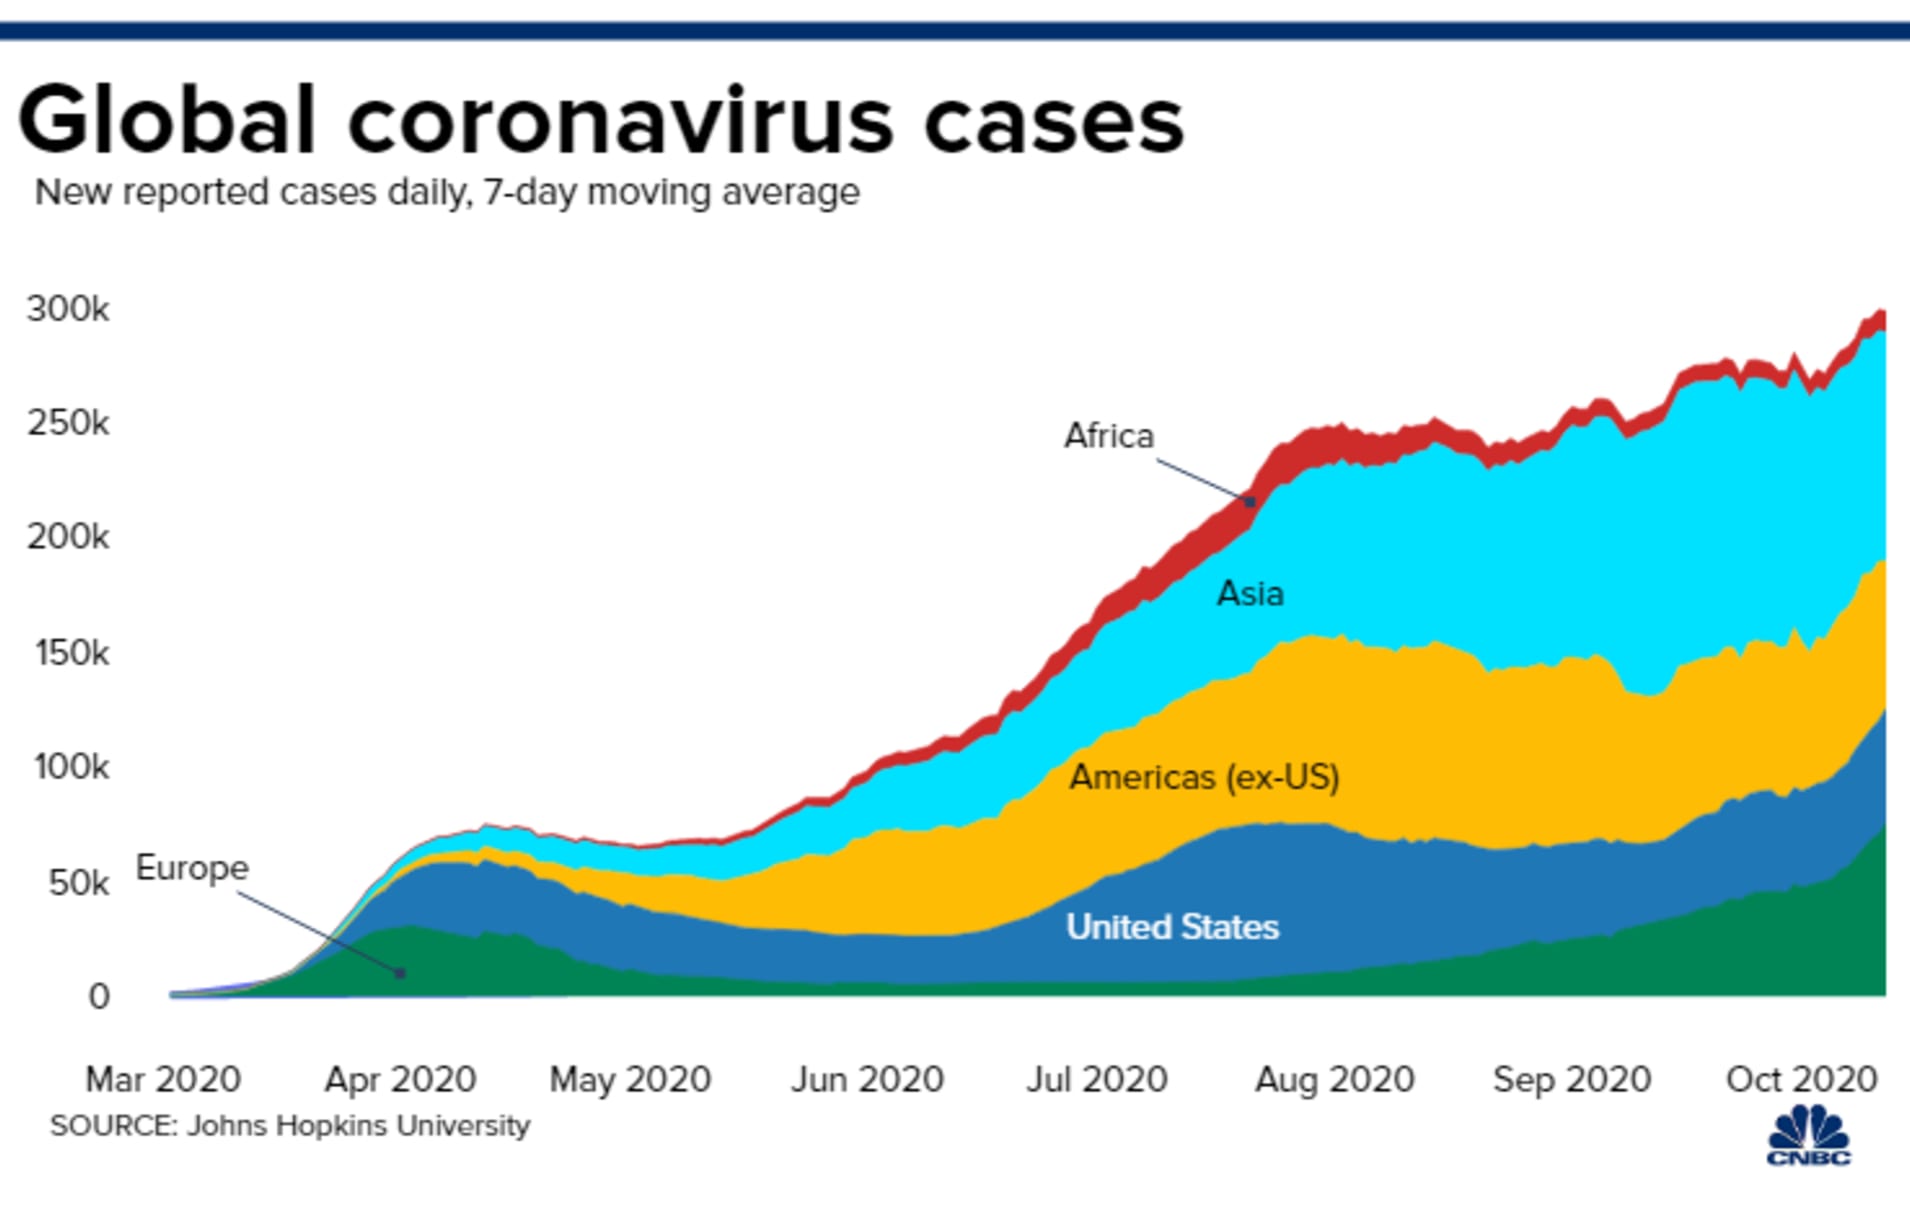 Chart of daily new coronavirus cases by region through May 13, 2020.